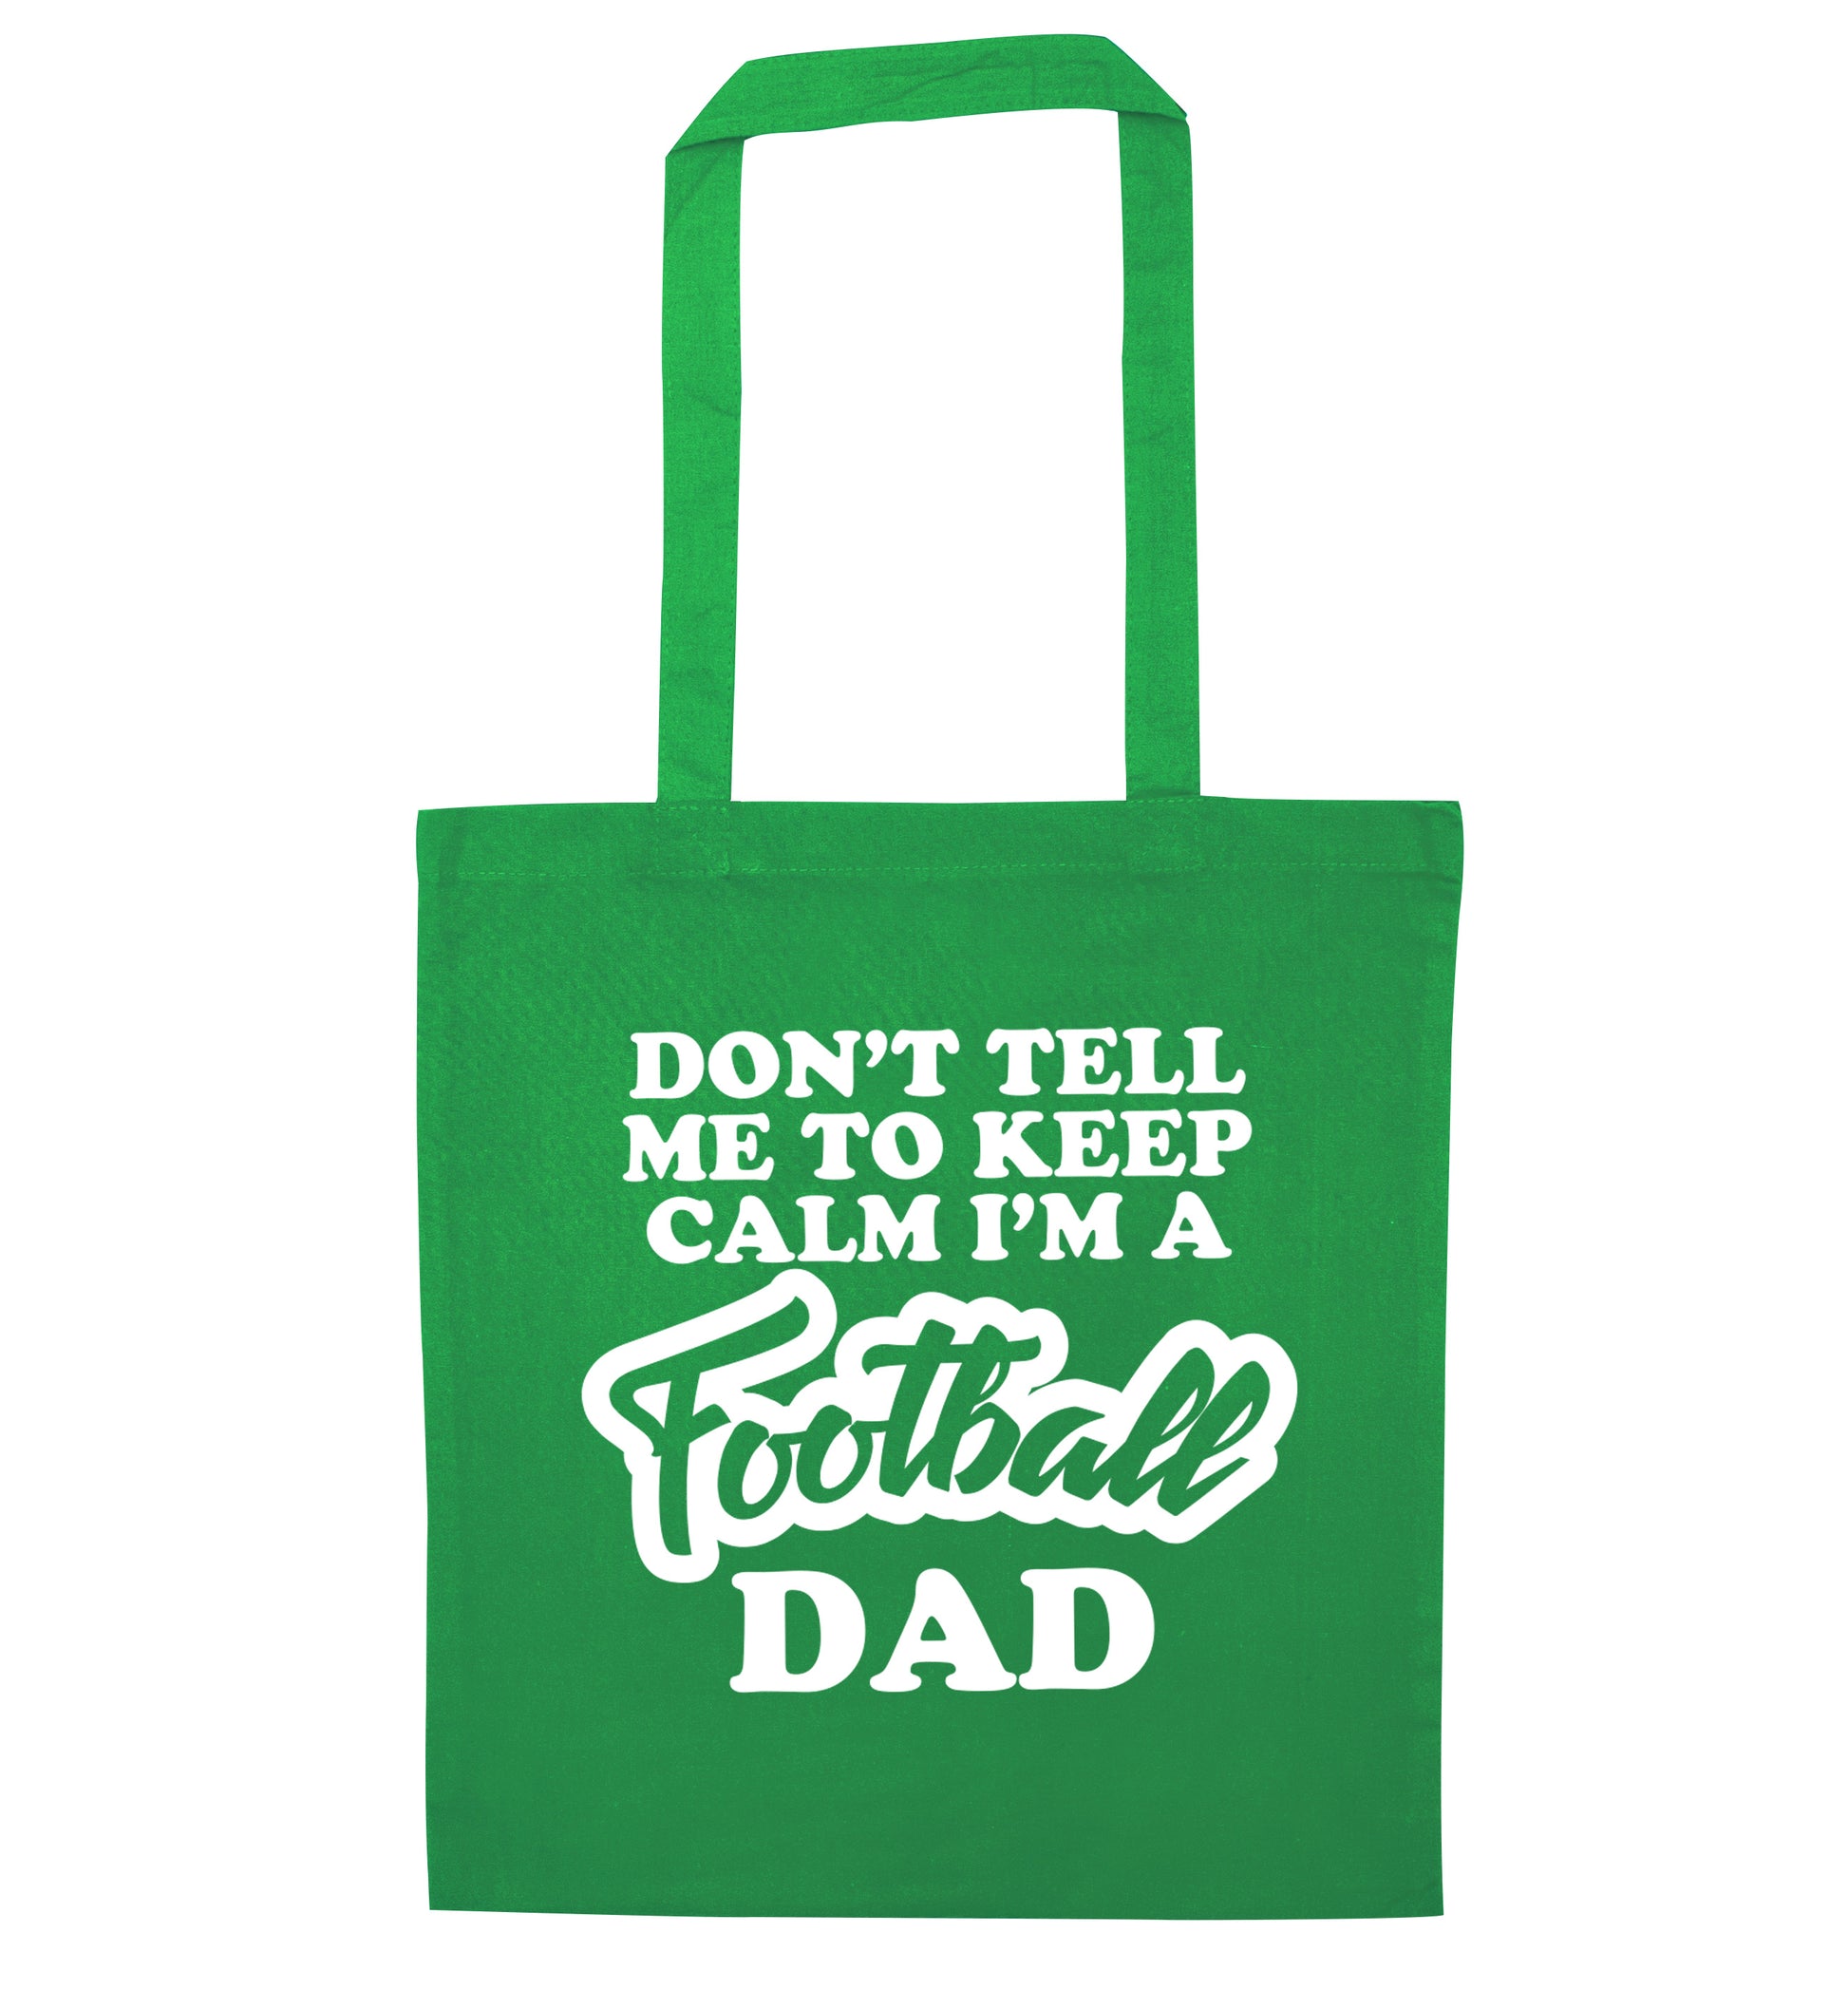 Don't tell me to keep calm I'm a football grandad green tote bag